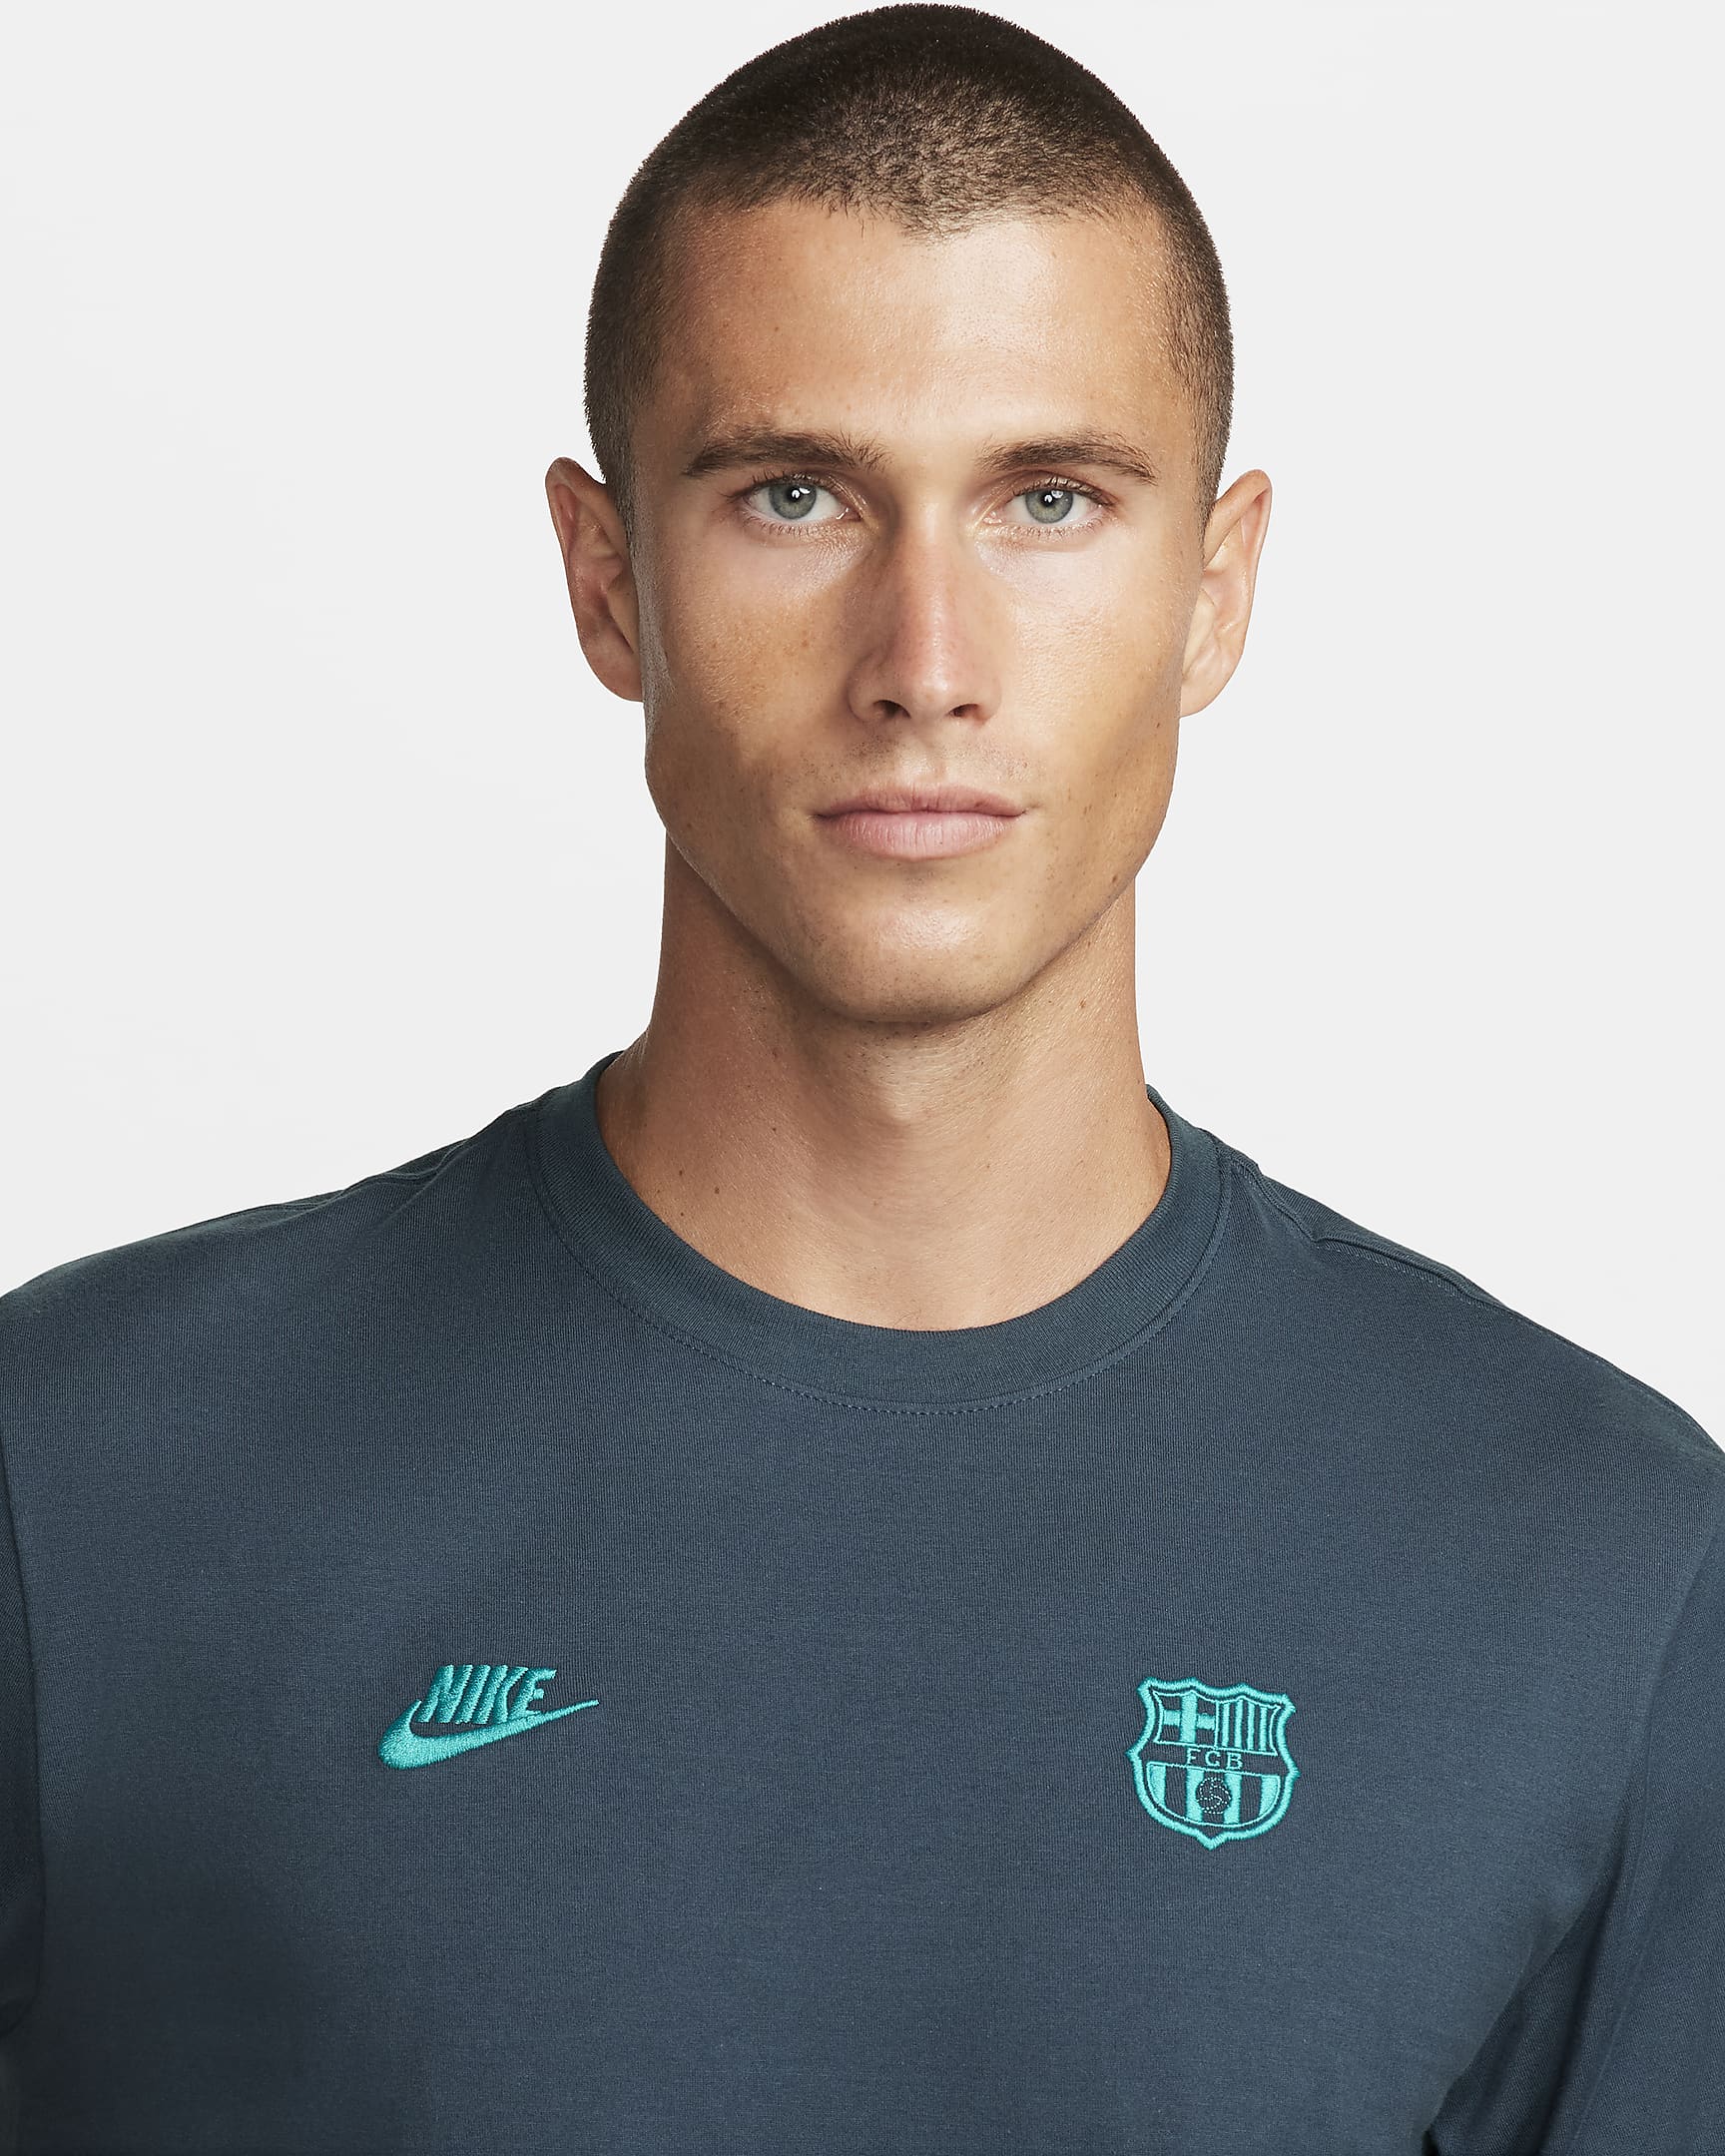 FC Barcelona Essential Men's Nike Soccer T-Shirt. Nike.com